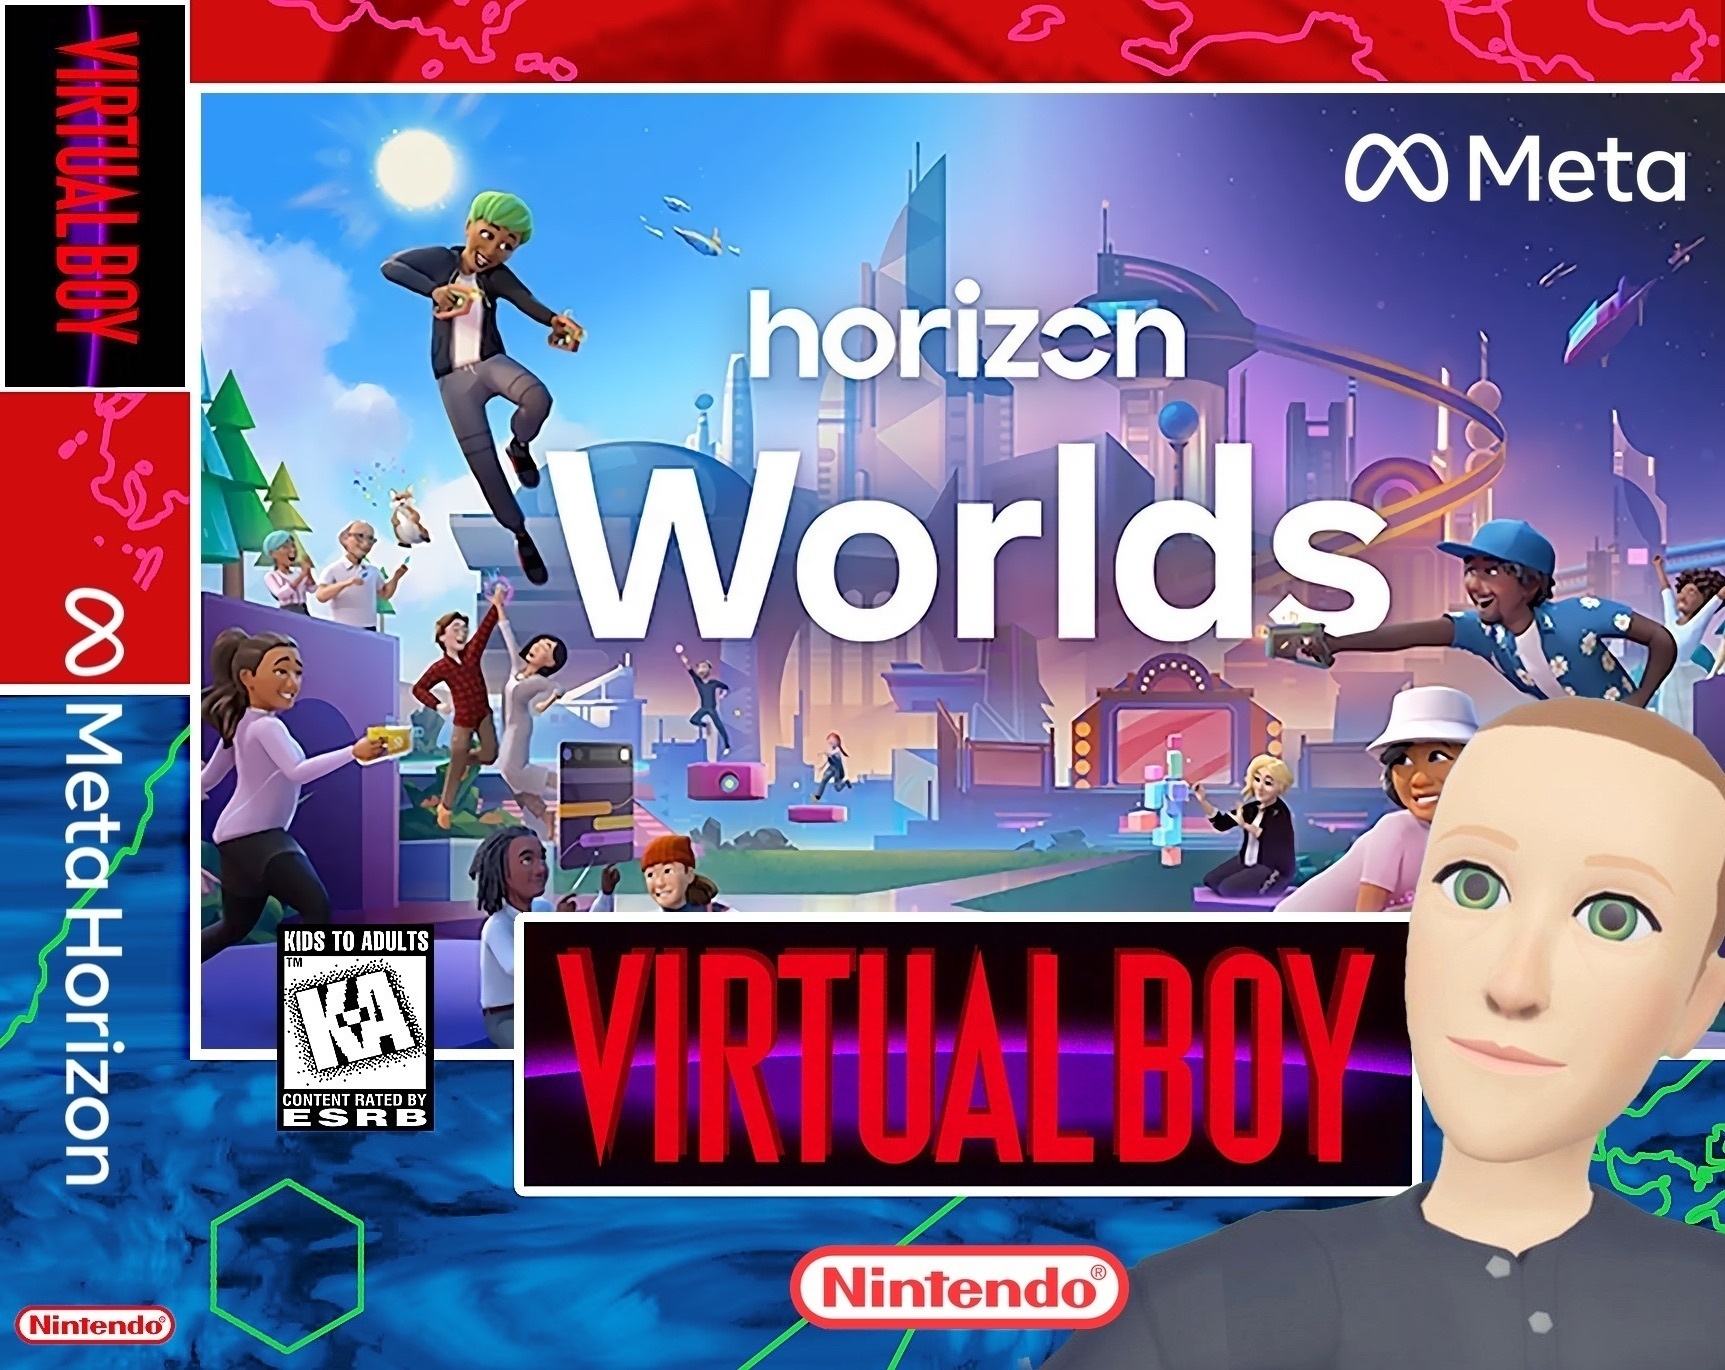 Meta Horizon Worlds for the Nintendo Virtual Boy